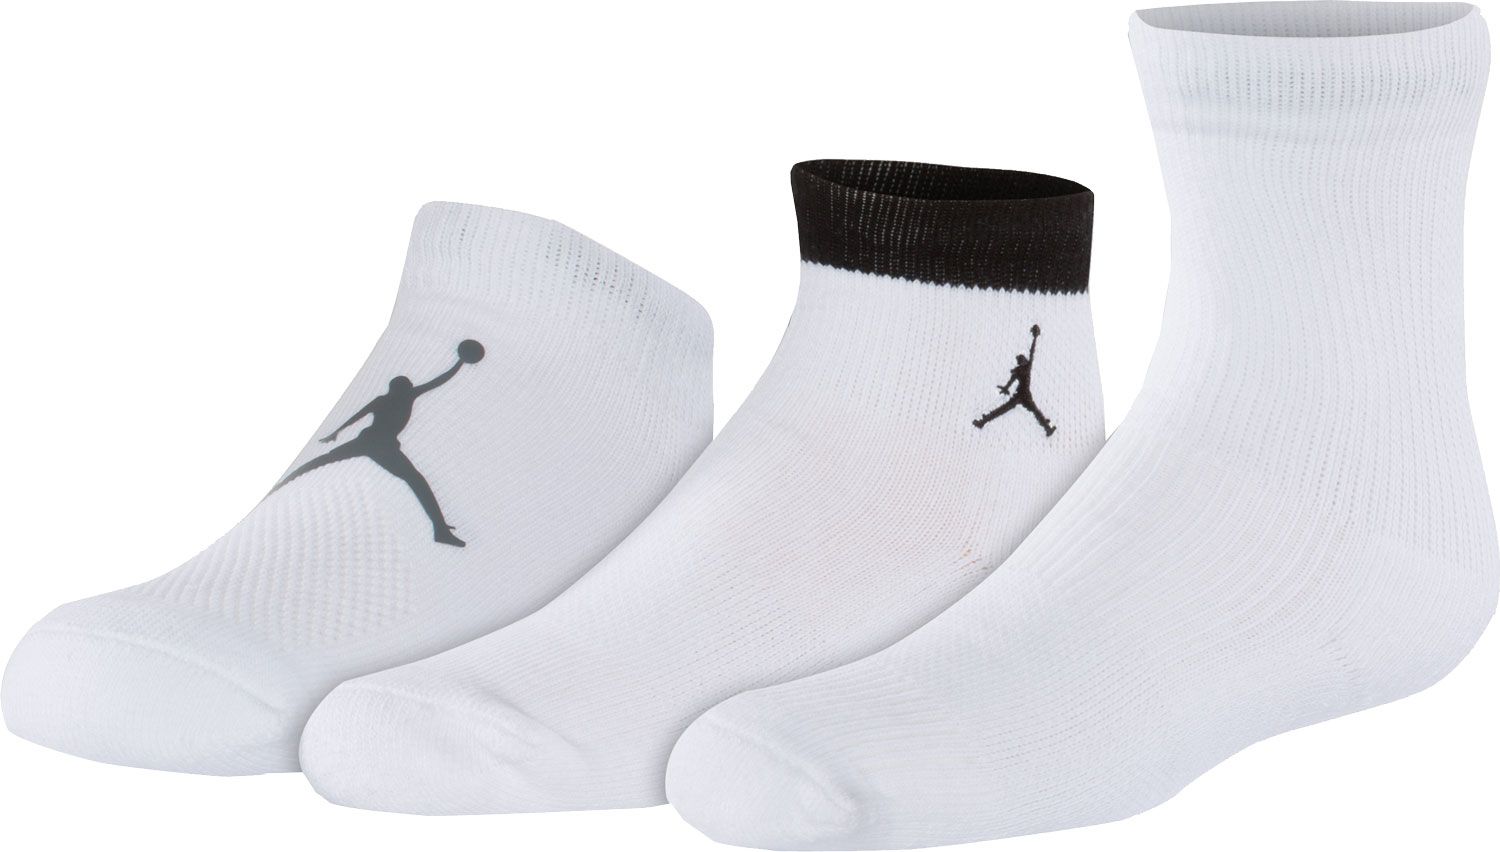 Jordan Socks | DICK'S Sporting Goods